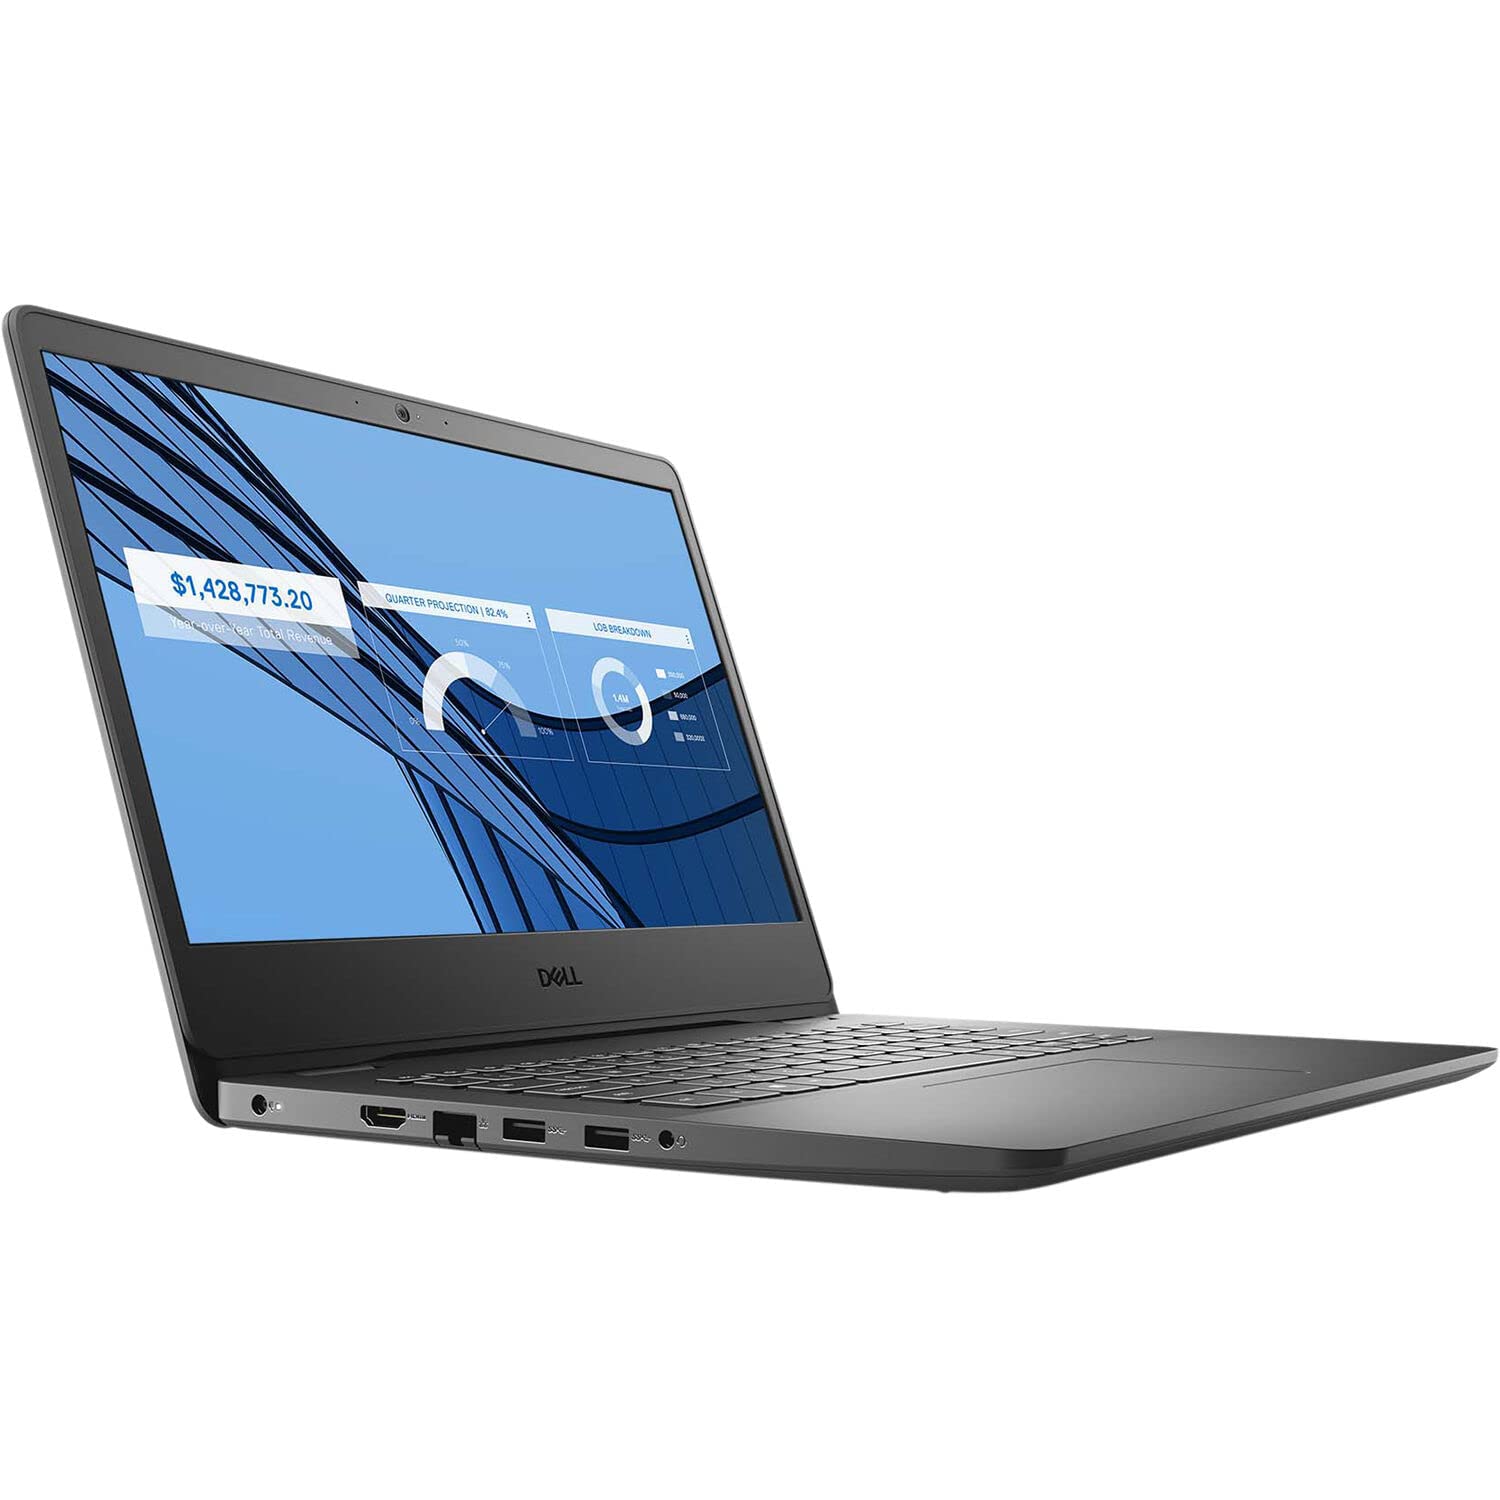 Dell Vostro 14 3400 Business Laptop Computer, 14" FHD Anti-Glare, Intel Quad-Core i5-1135G7 (Beat i7-1065G7), 8GB DDR4 RAM, 256GB PCIe SSD + 1TB HDD, 802.11AC WiFi, Bluetooth, Webcam, Windows 11 Pro